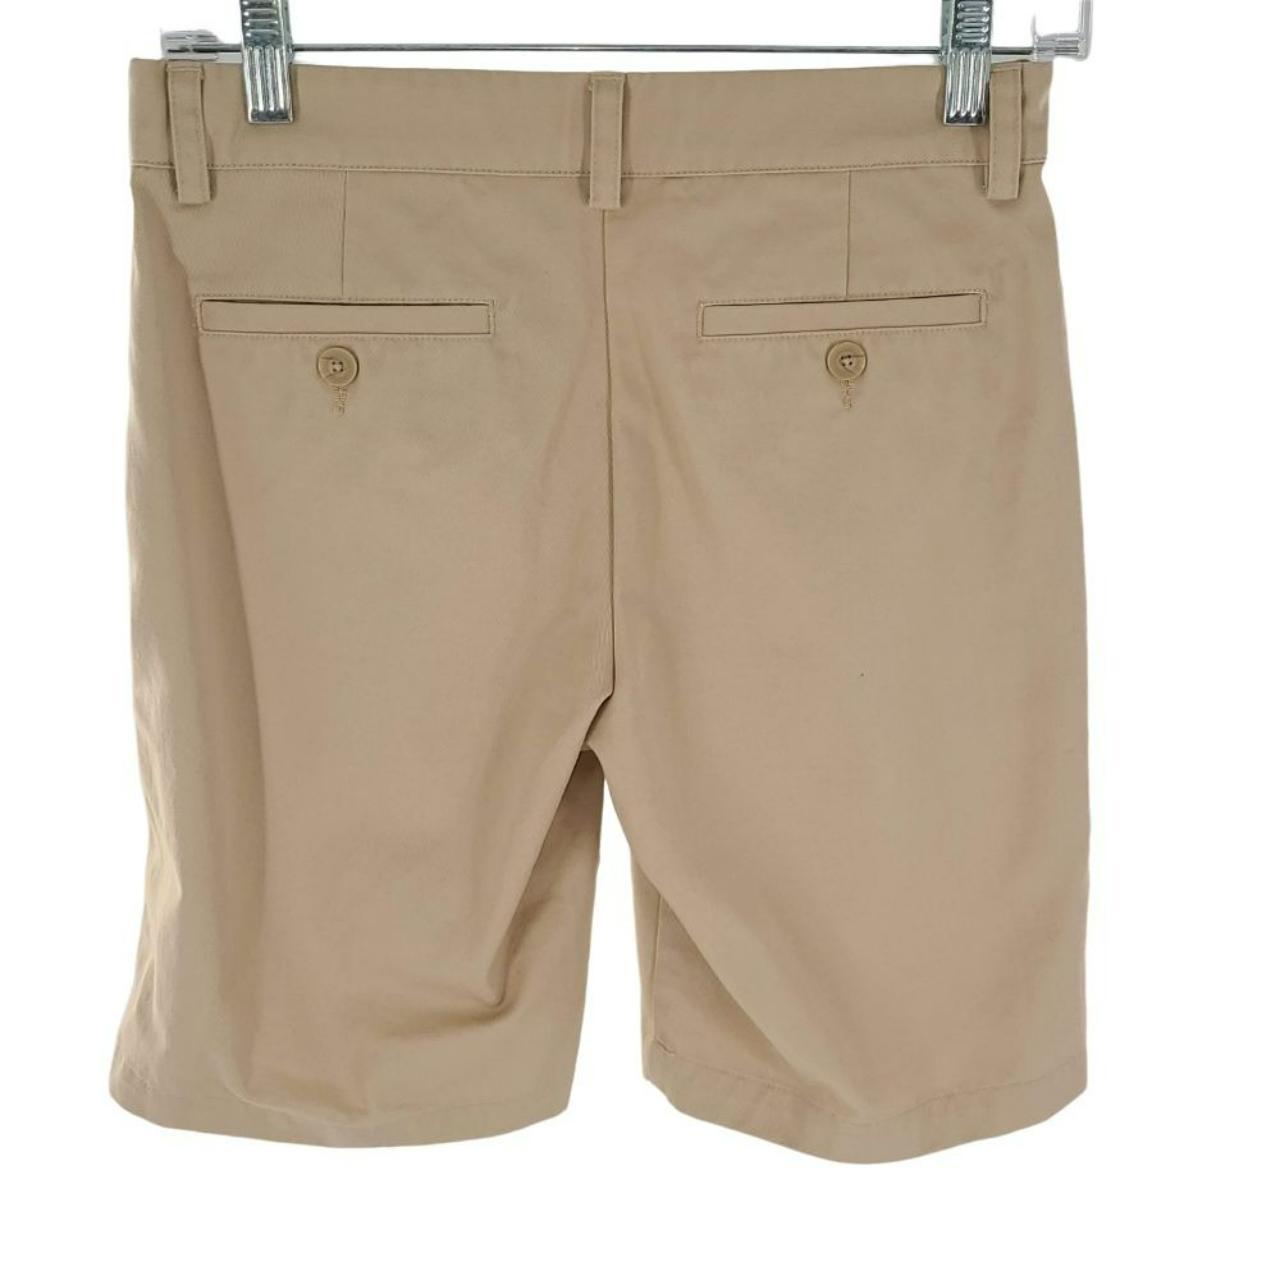 Product Image 2 - Slazenger Women's Uniforms Bermuda Shorts